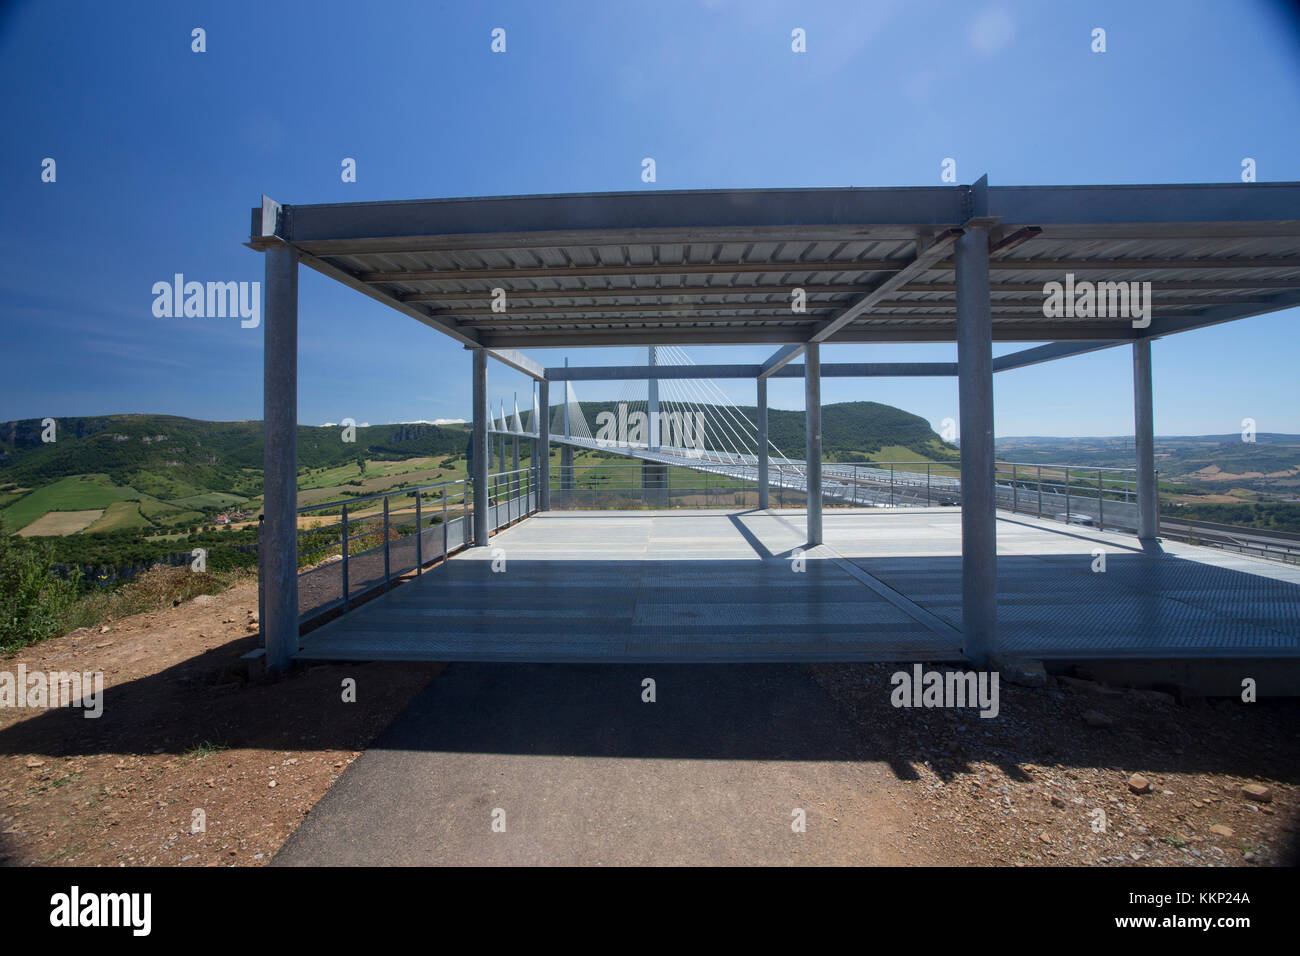 Viewing platform for Millau viaduct, Millau, France Stock Photo